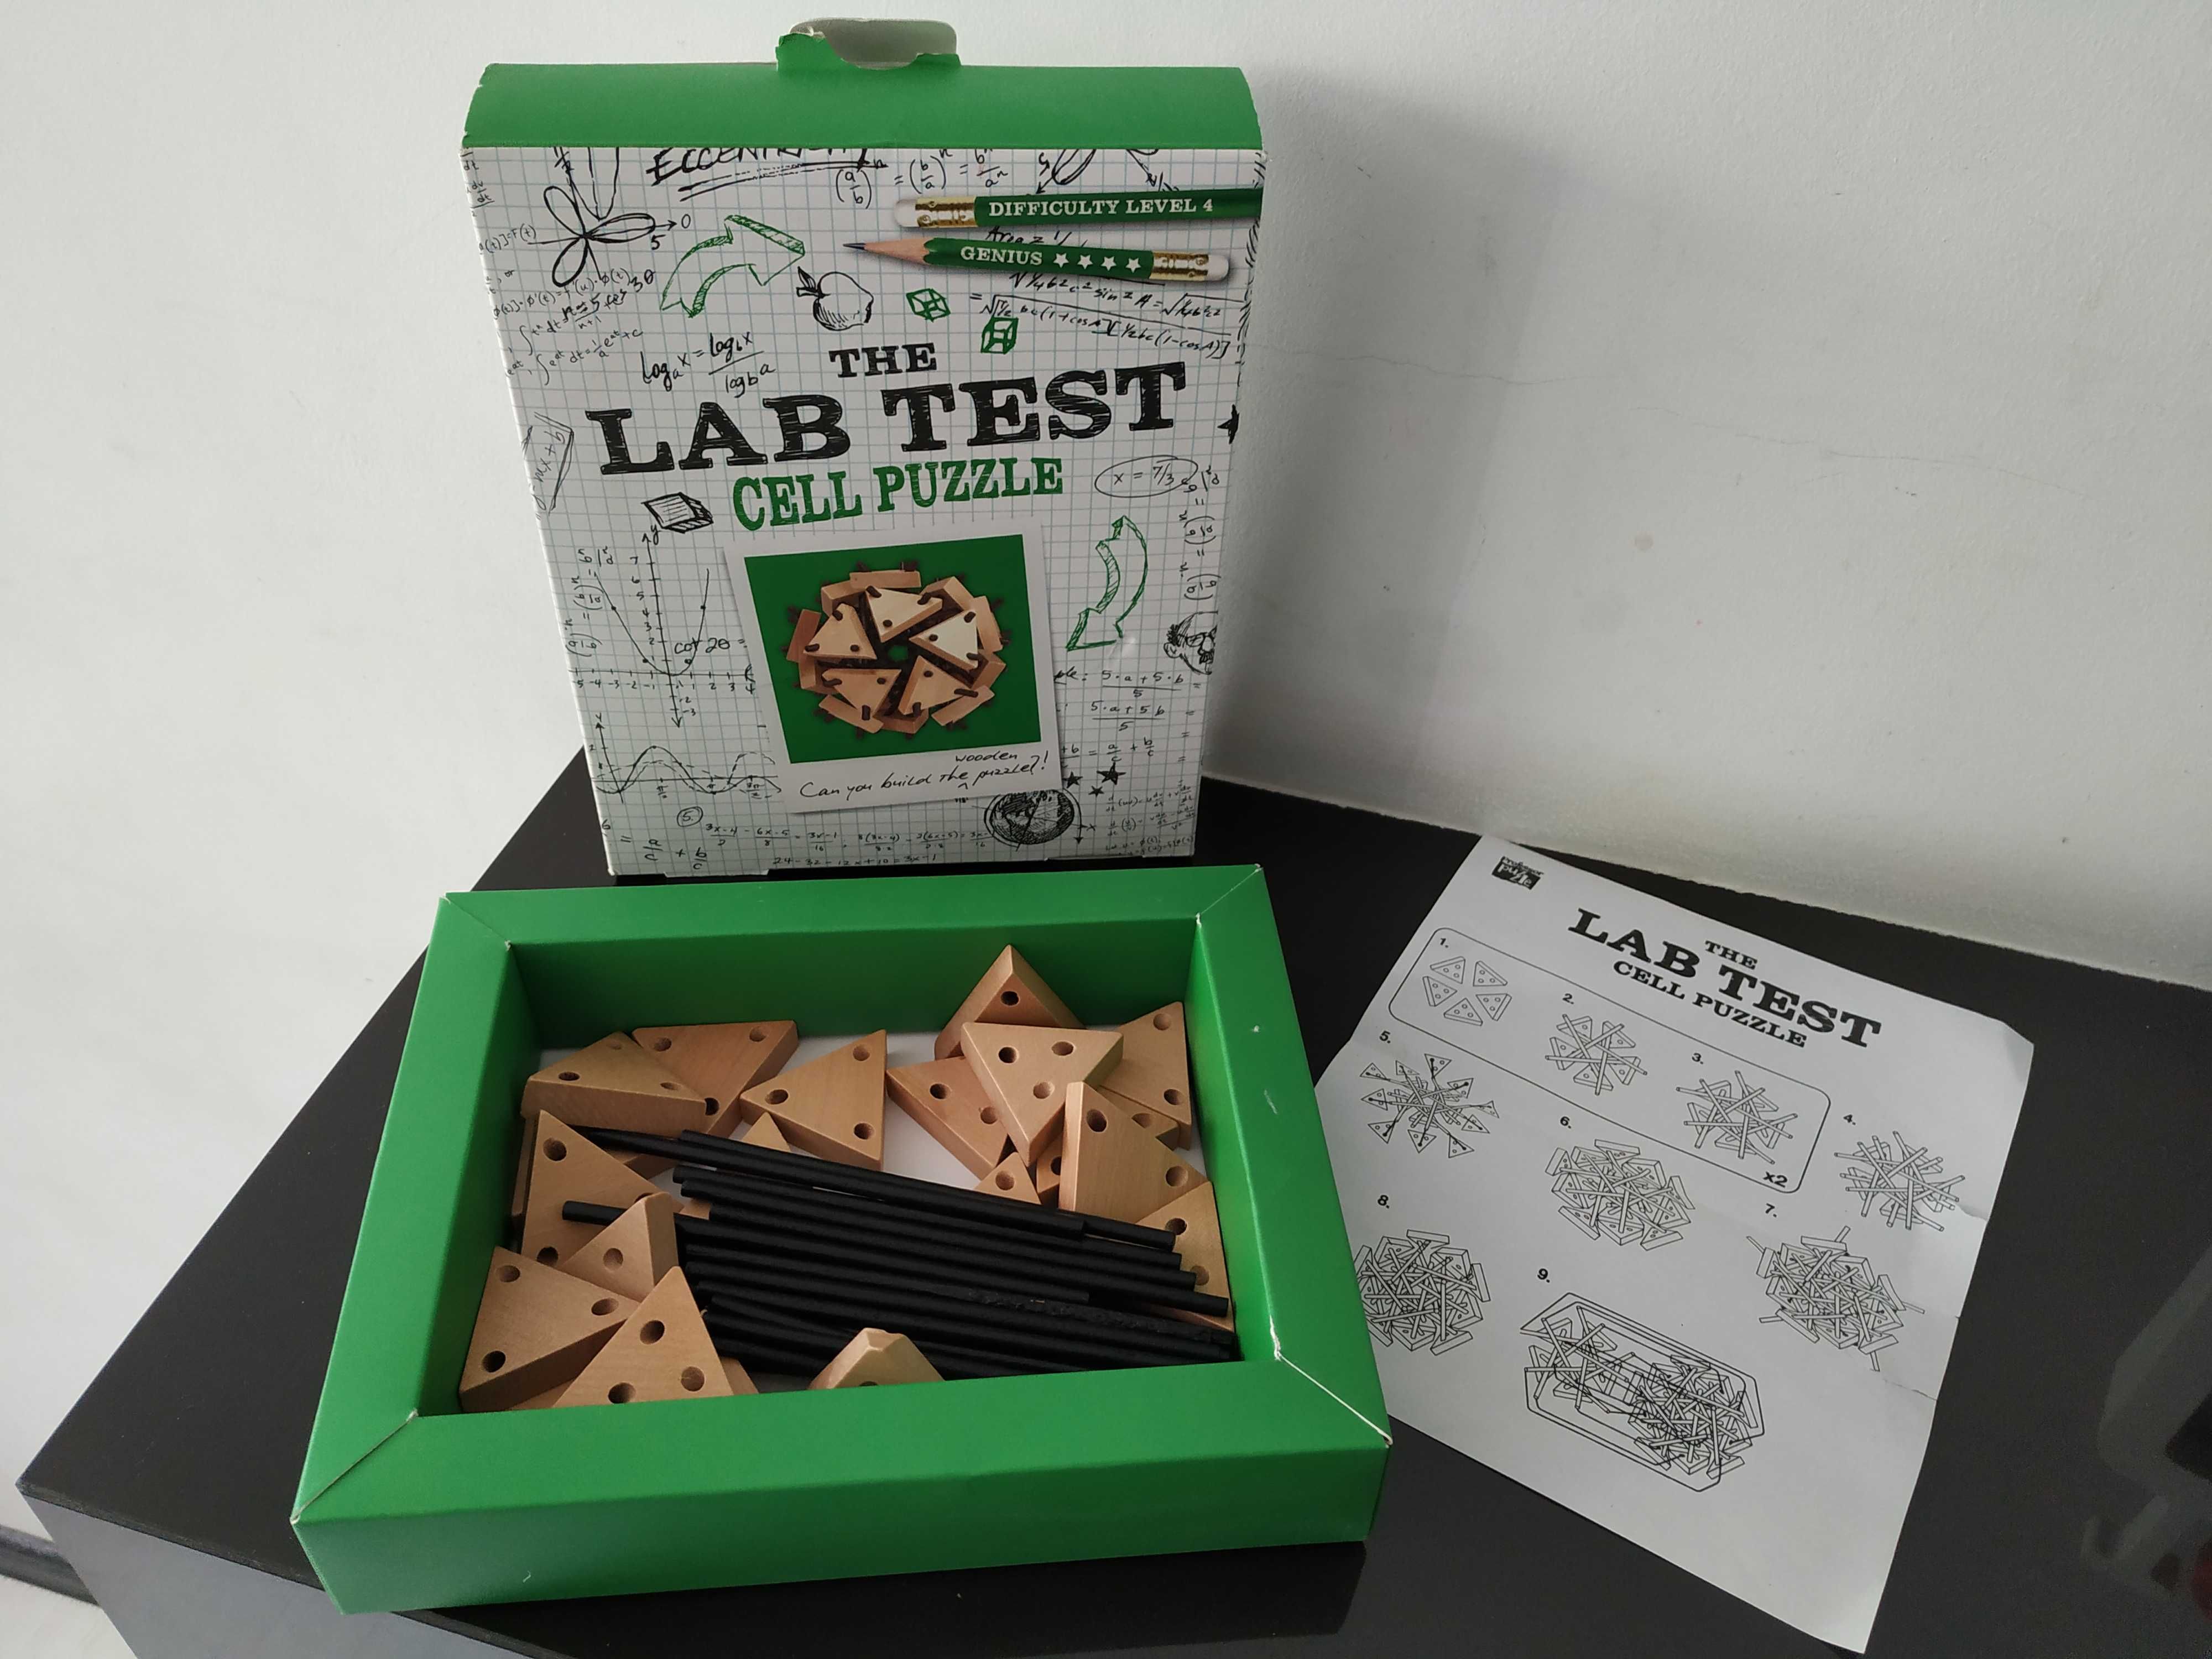 Головоломка Professor Puzzle Lab Test The Cell